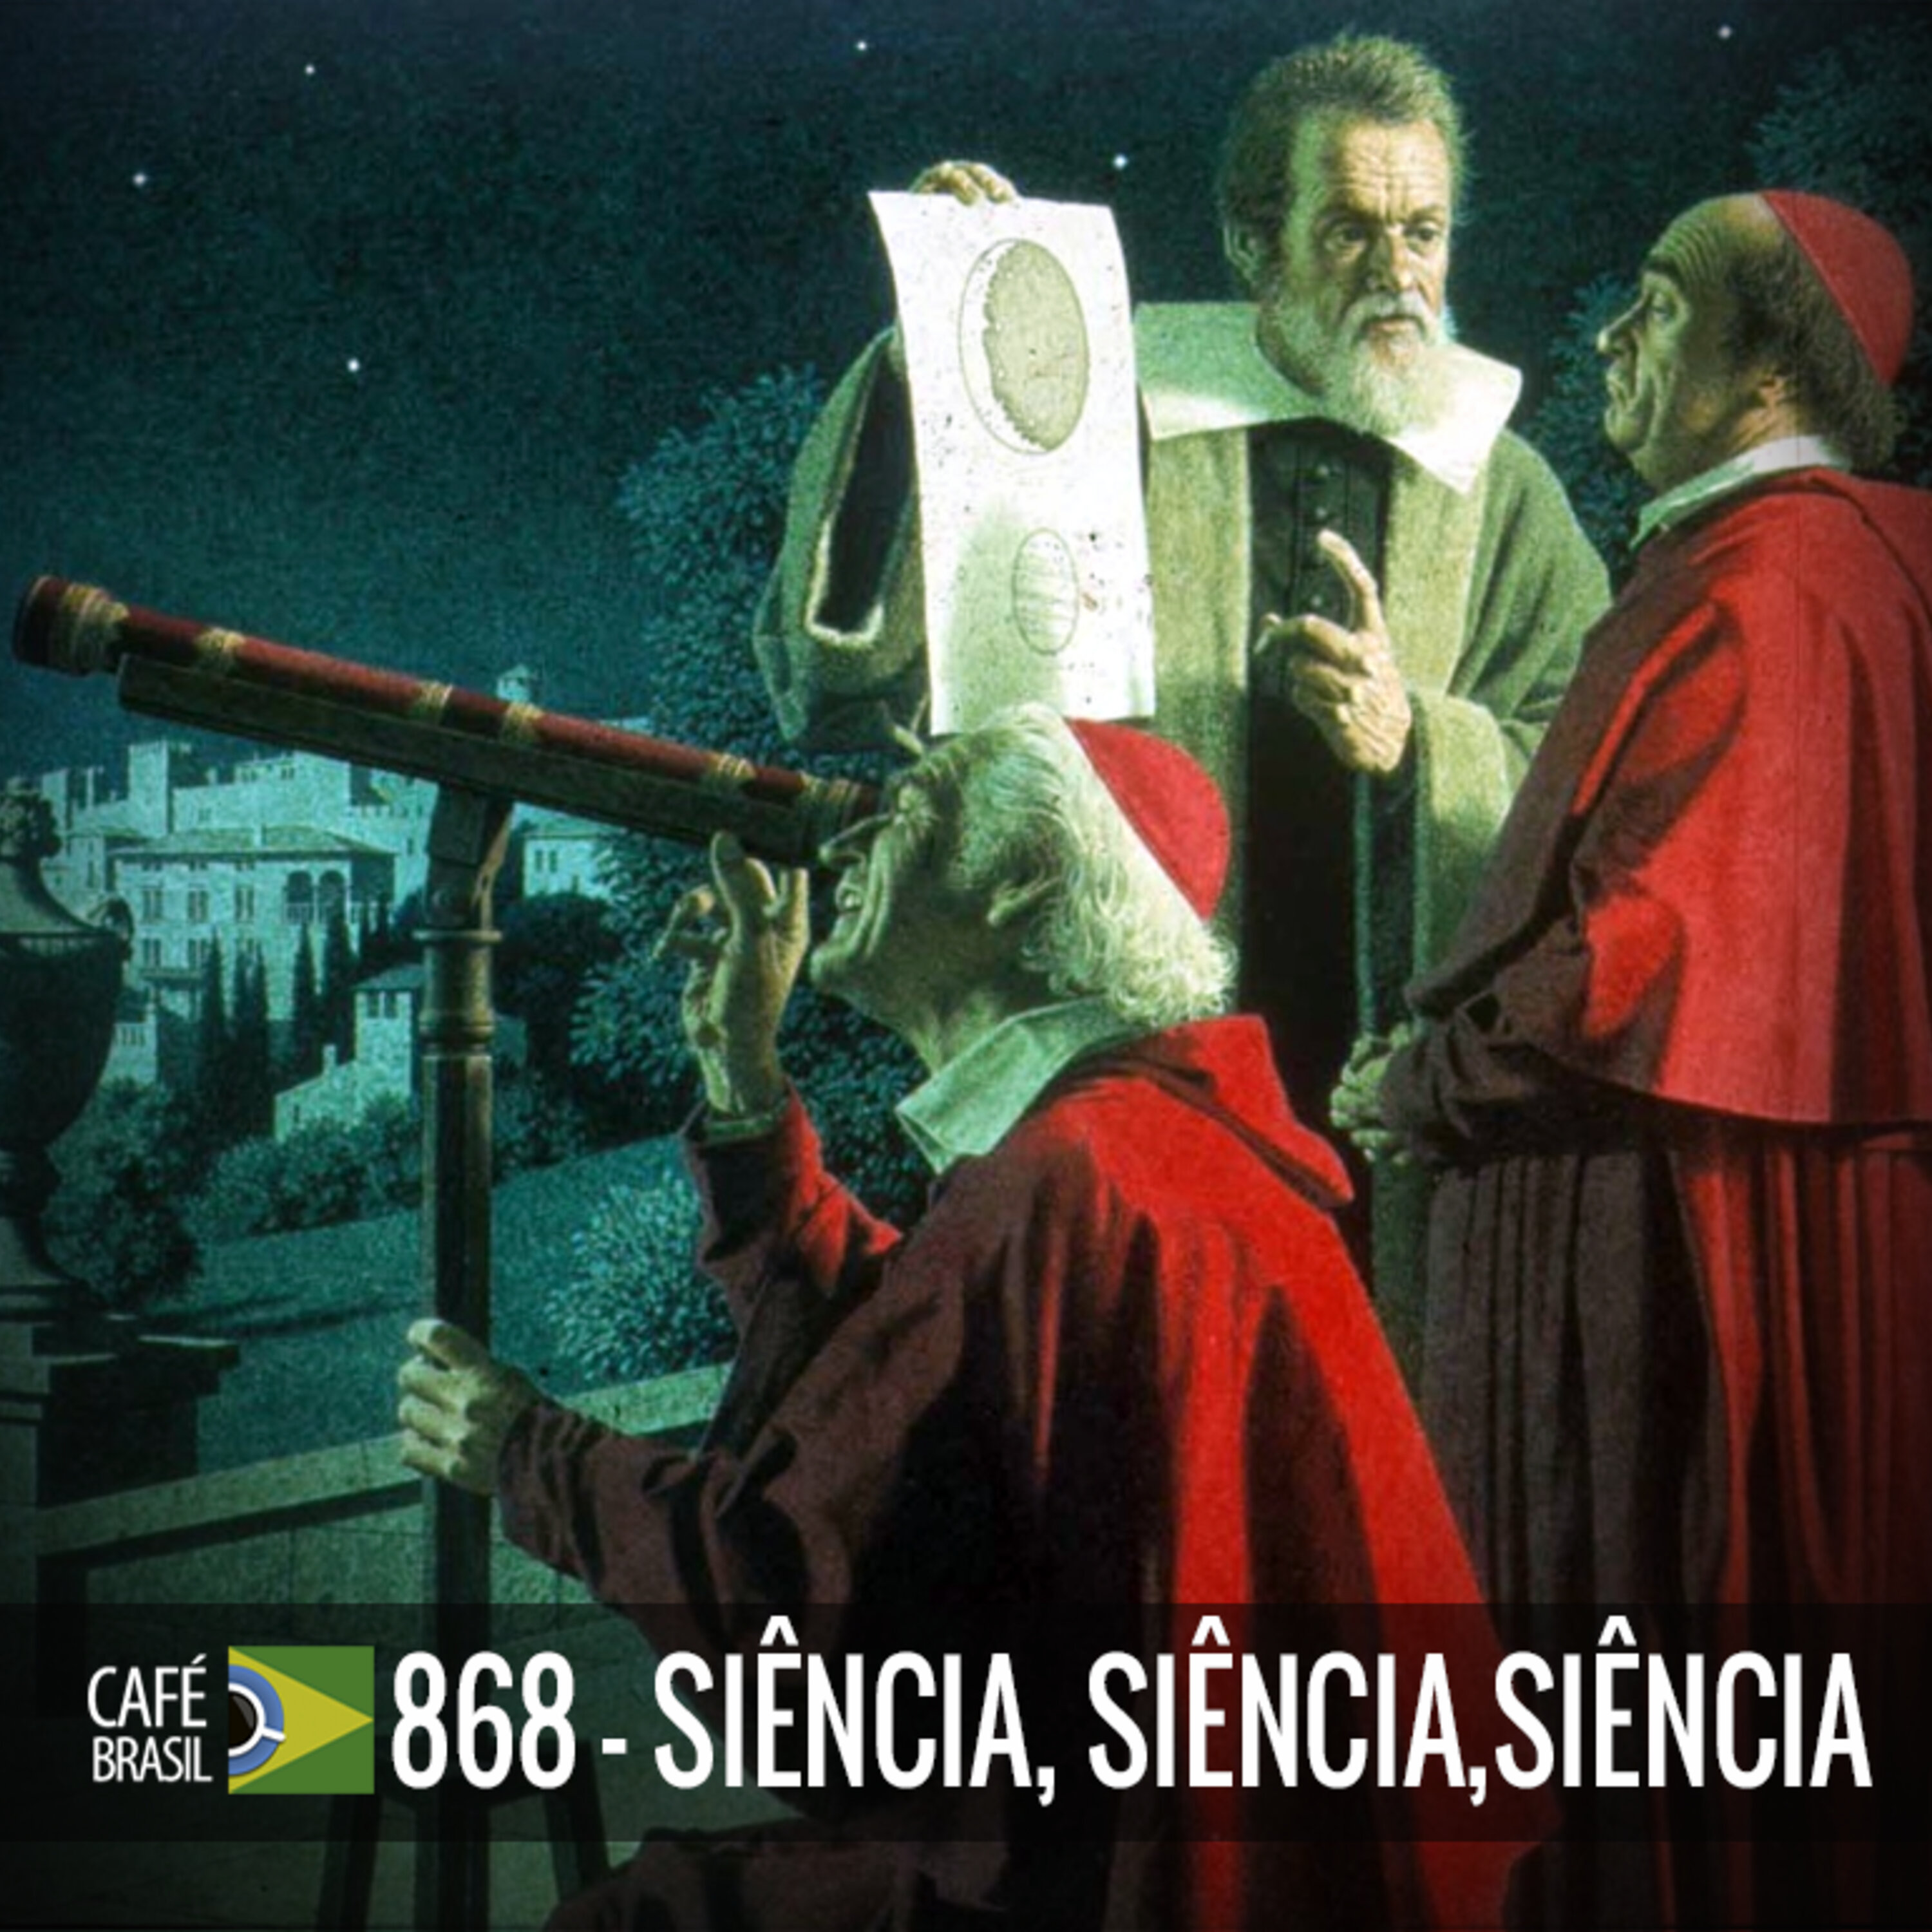 868 - Siencia siencia siencia